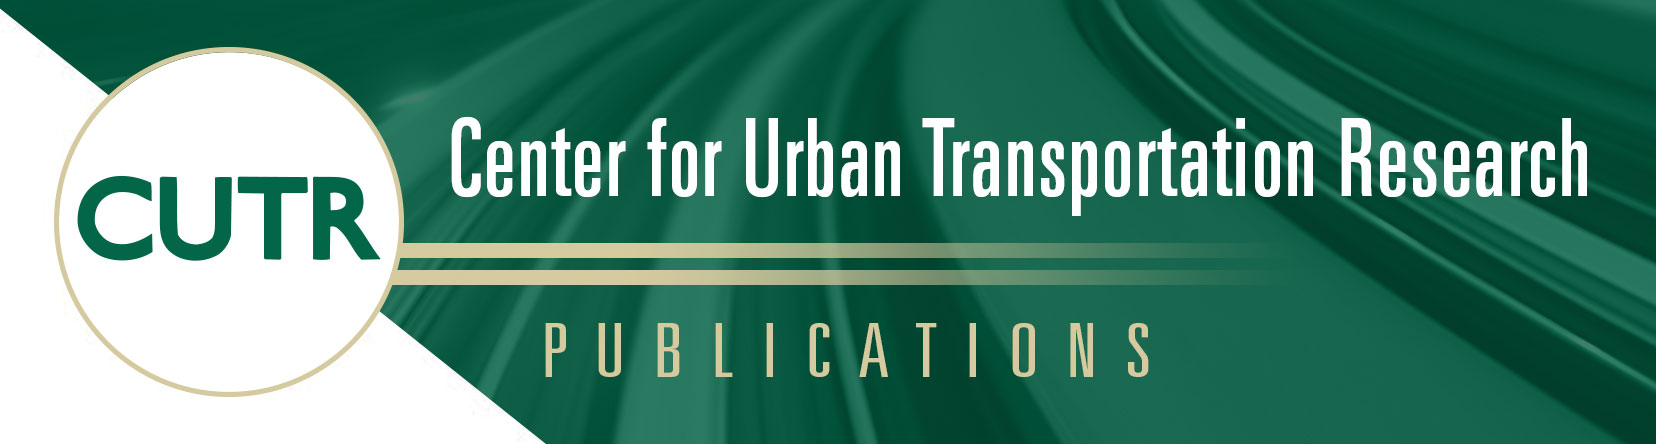 Center for Urban Transportation Research (CUTR)